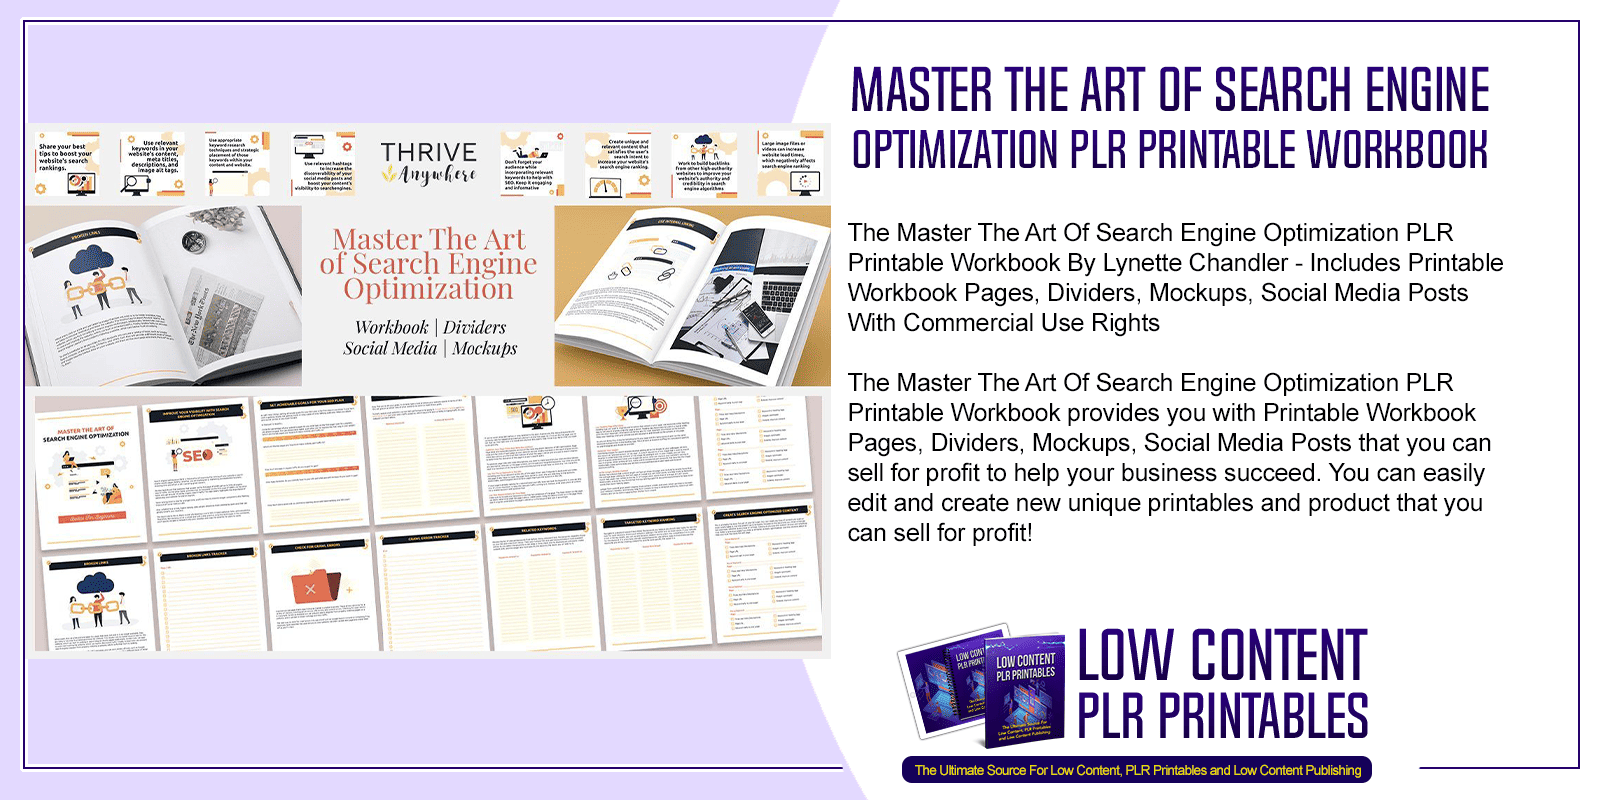 Master The Art Of Search Engine Optimization PLR Printable Workbook